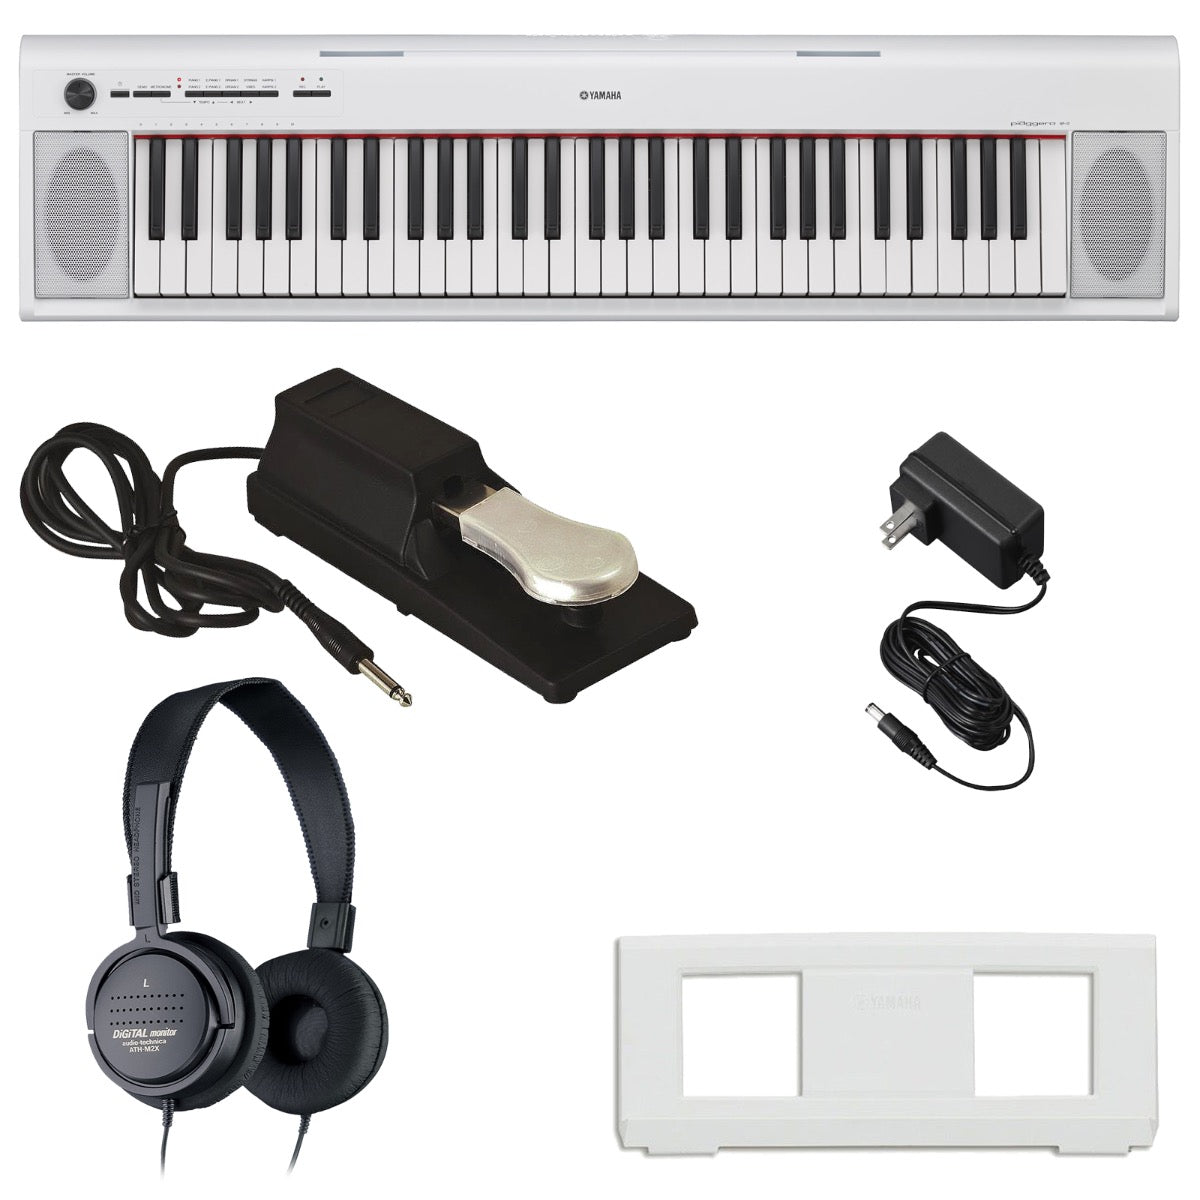 Yamaha Piaggero NP12 61-Key Portable Keyboard with Power Adapter - White  BONUS PAK